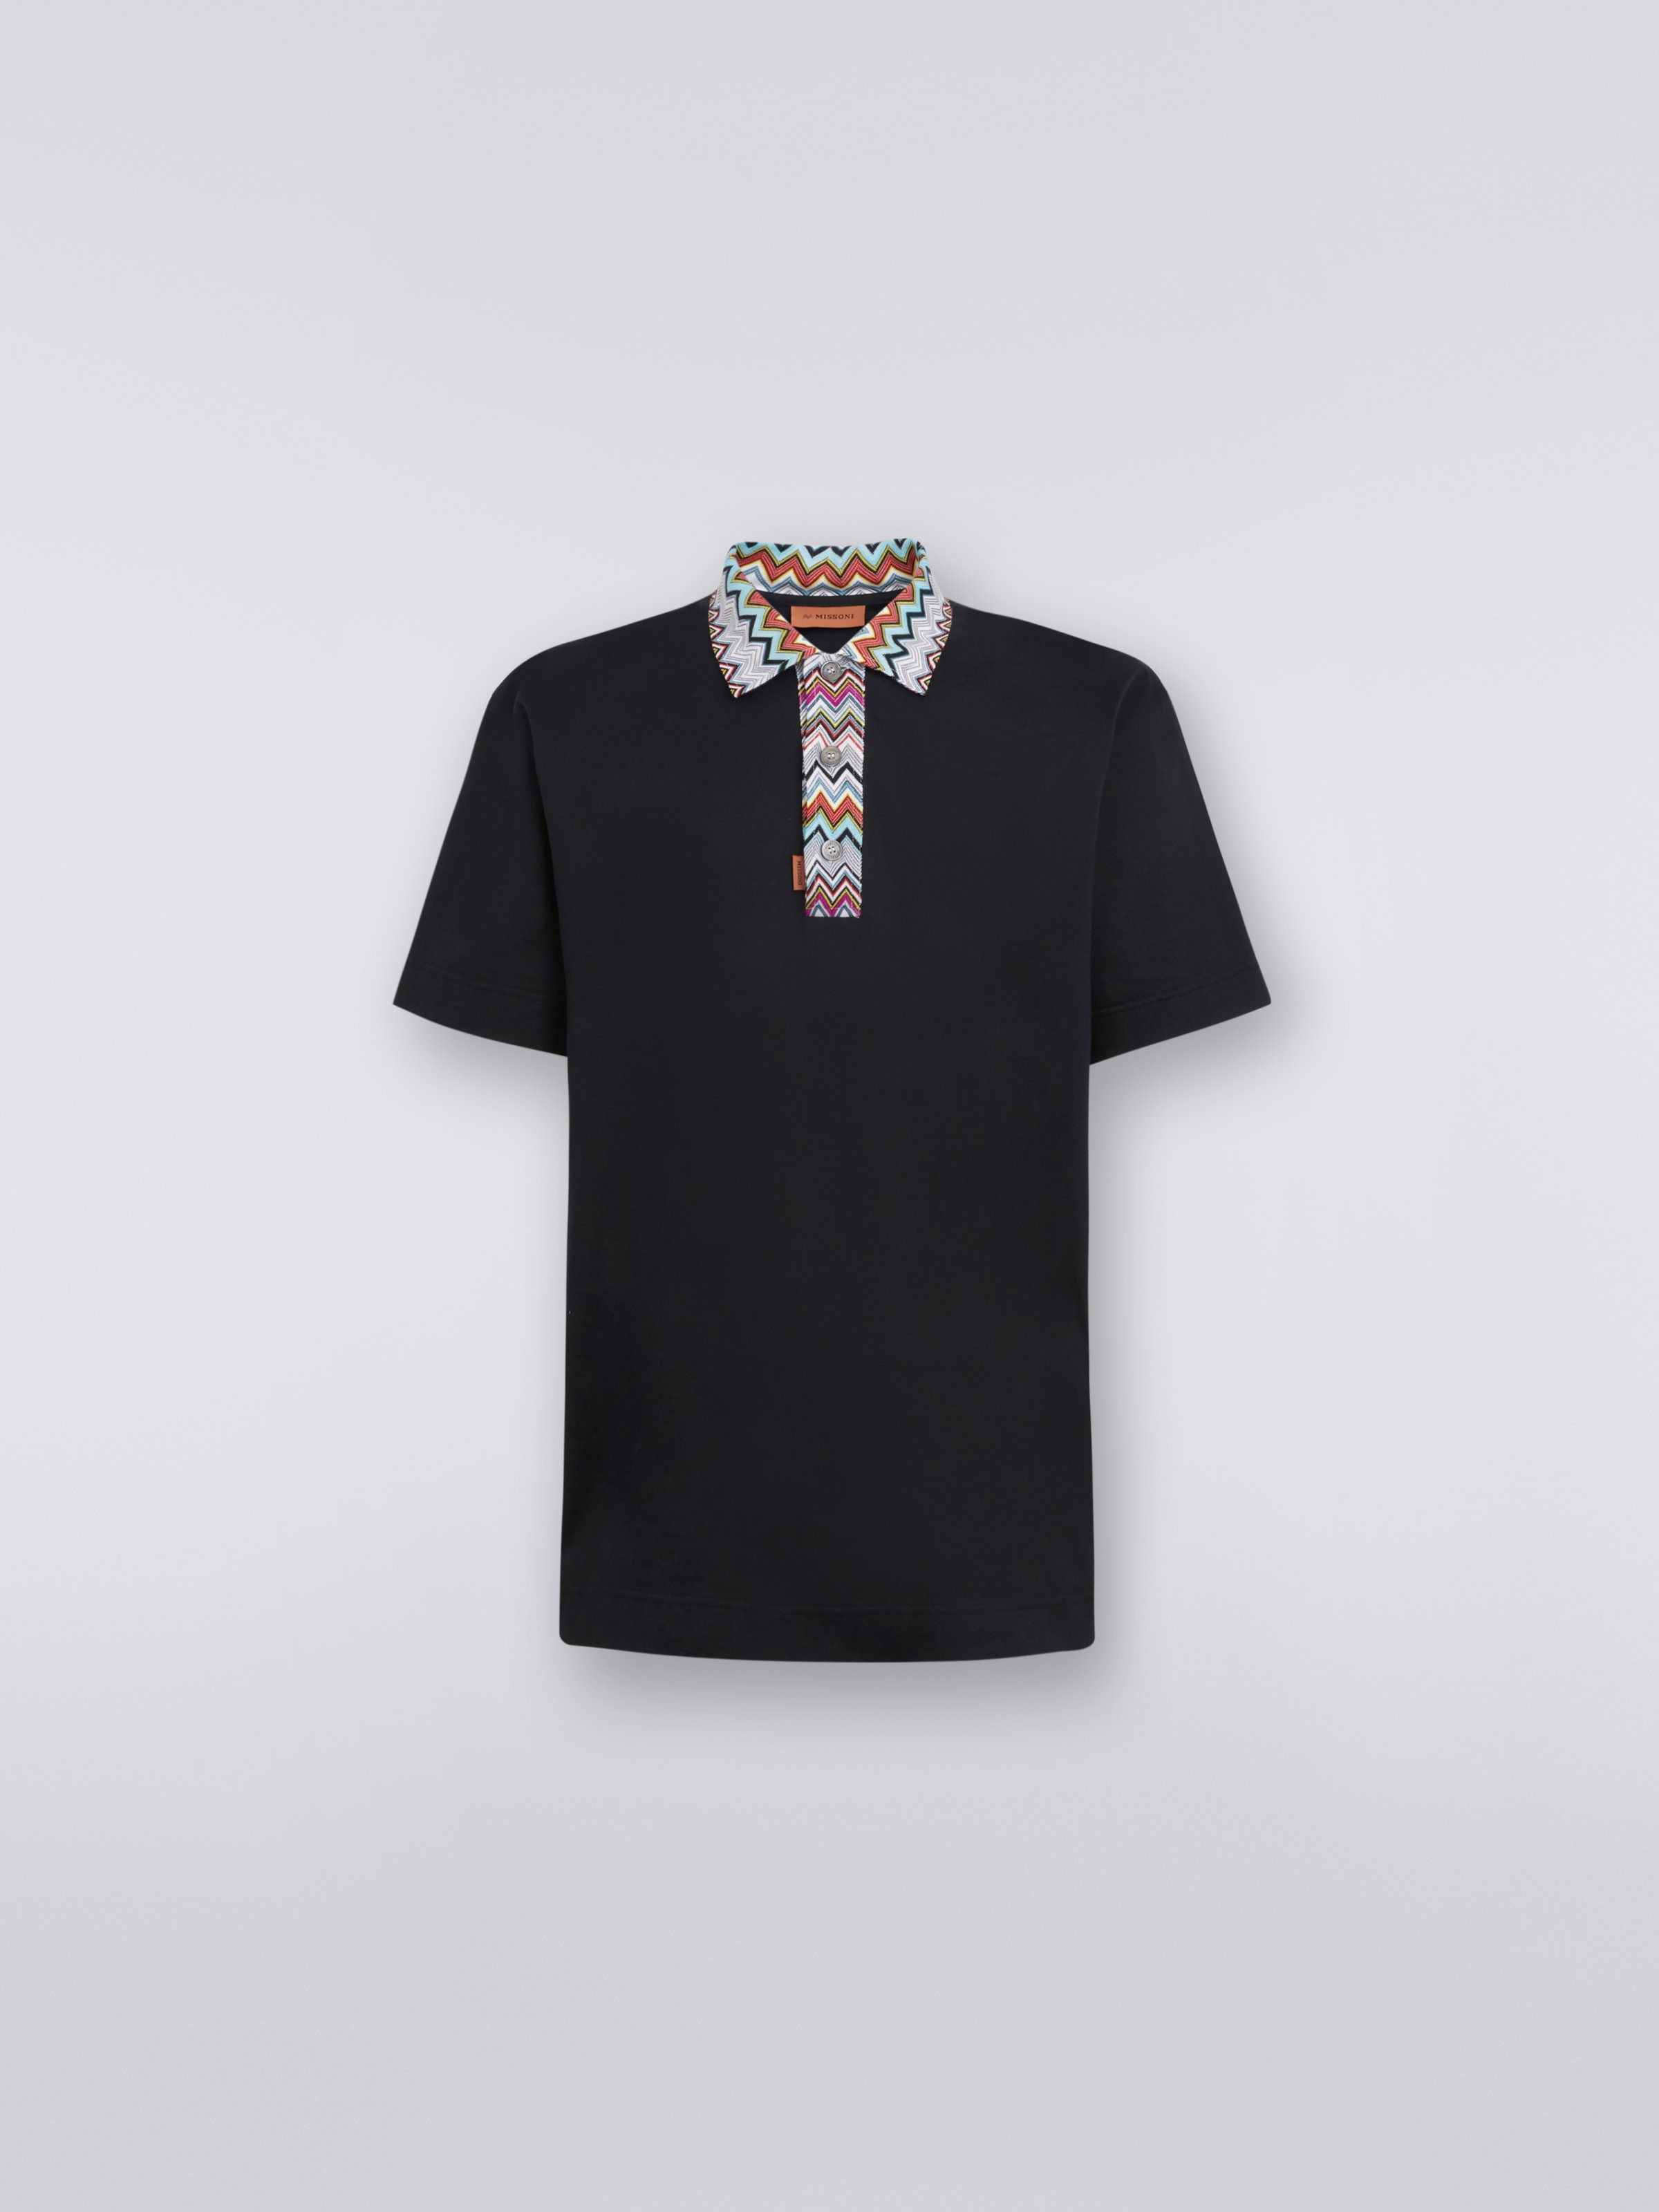 Cotton polo shirt with dégradé chevron pattern, Black    - 0